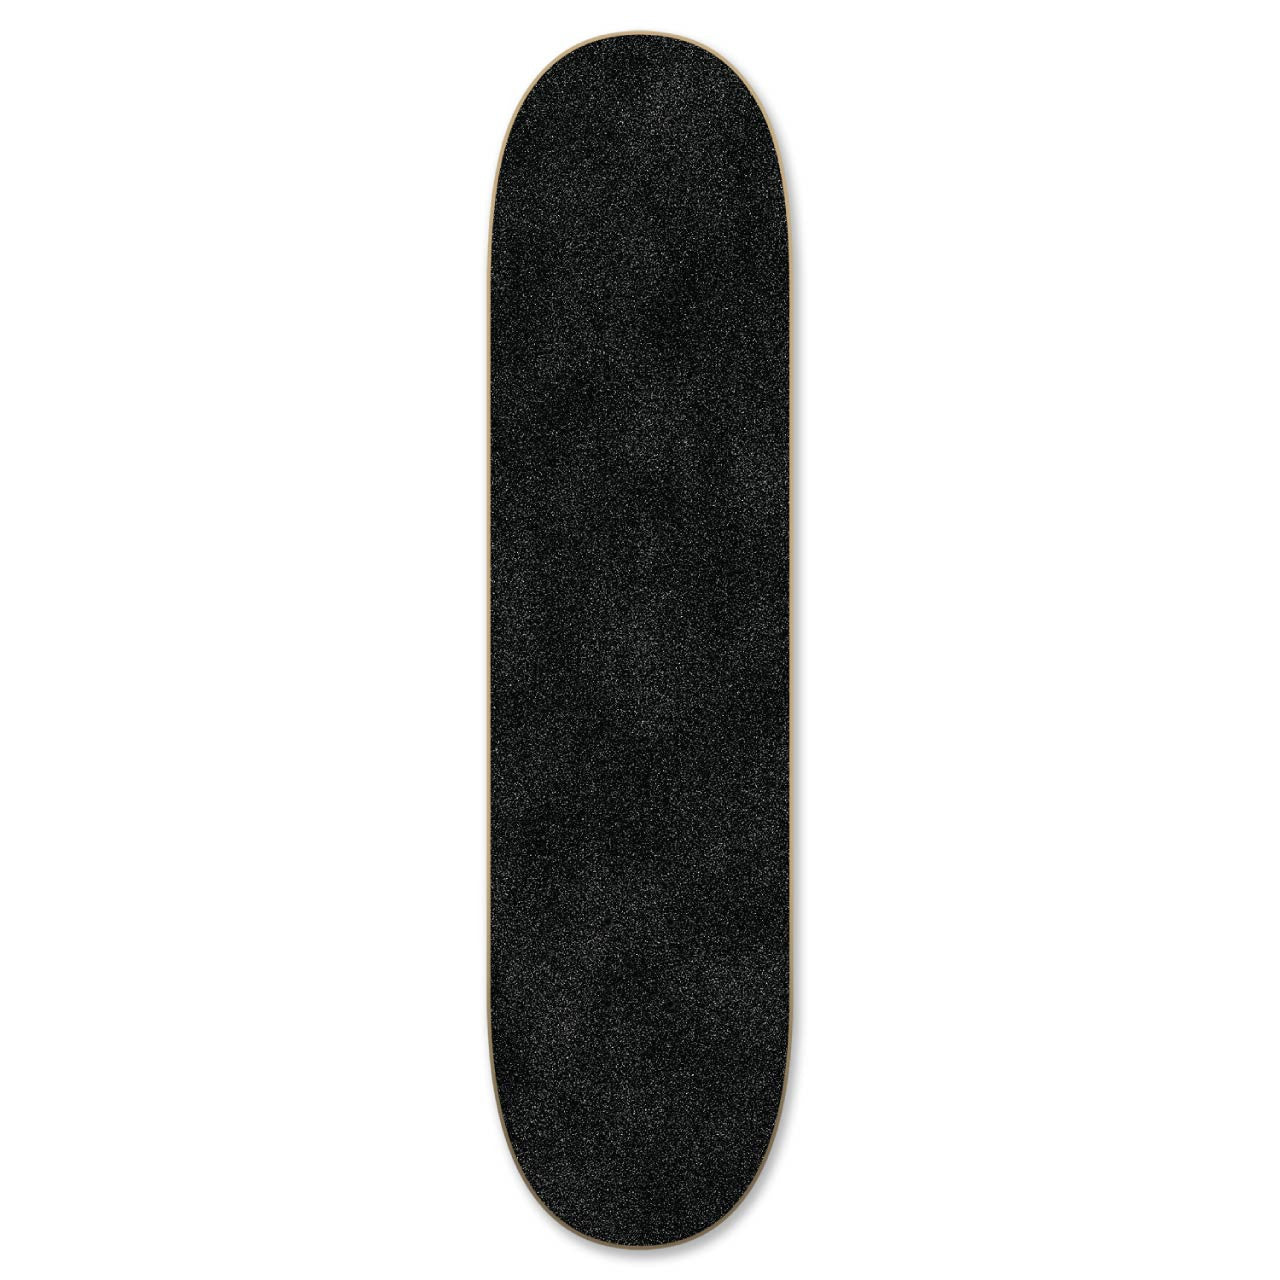 Graphic Skateboard Deck - Chimp Series - Hear No Evil